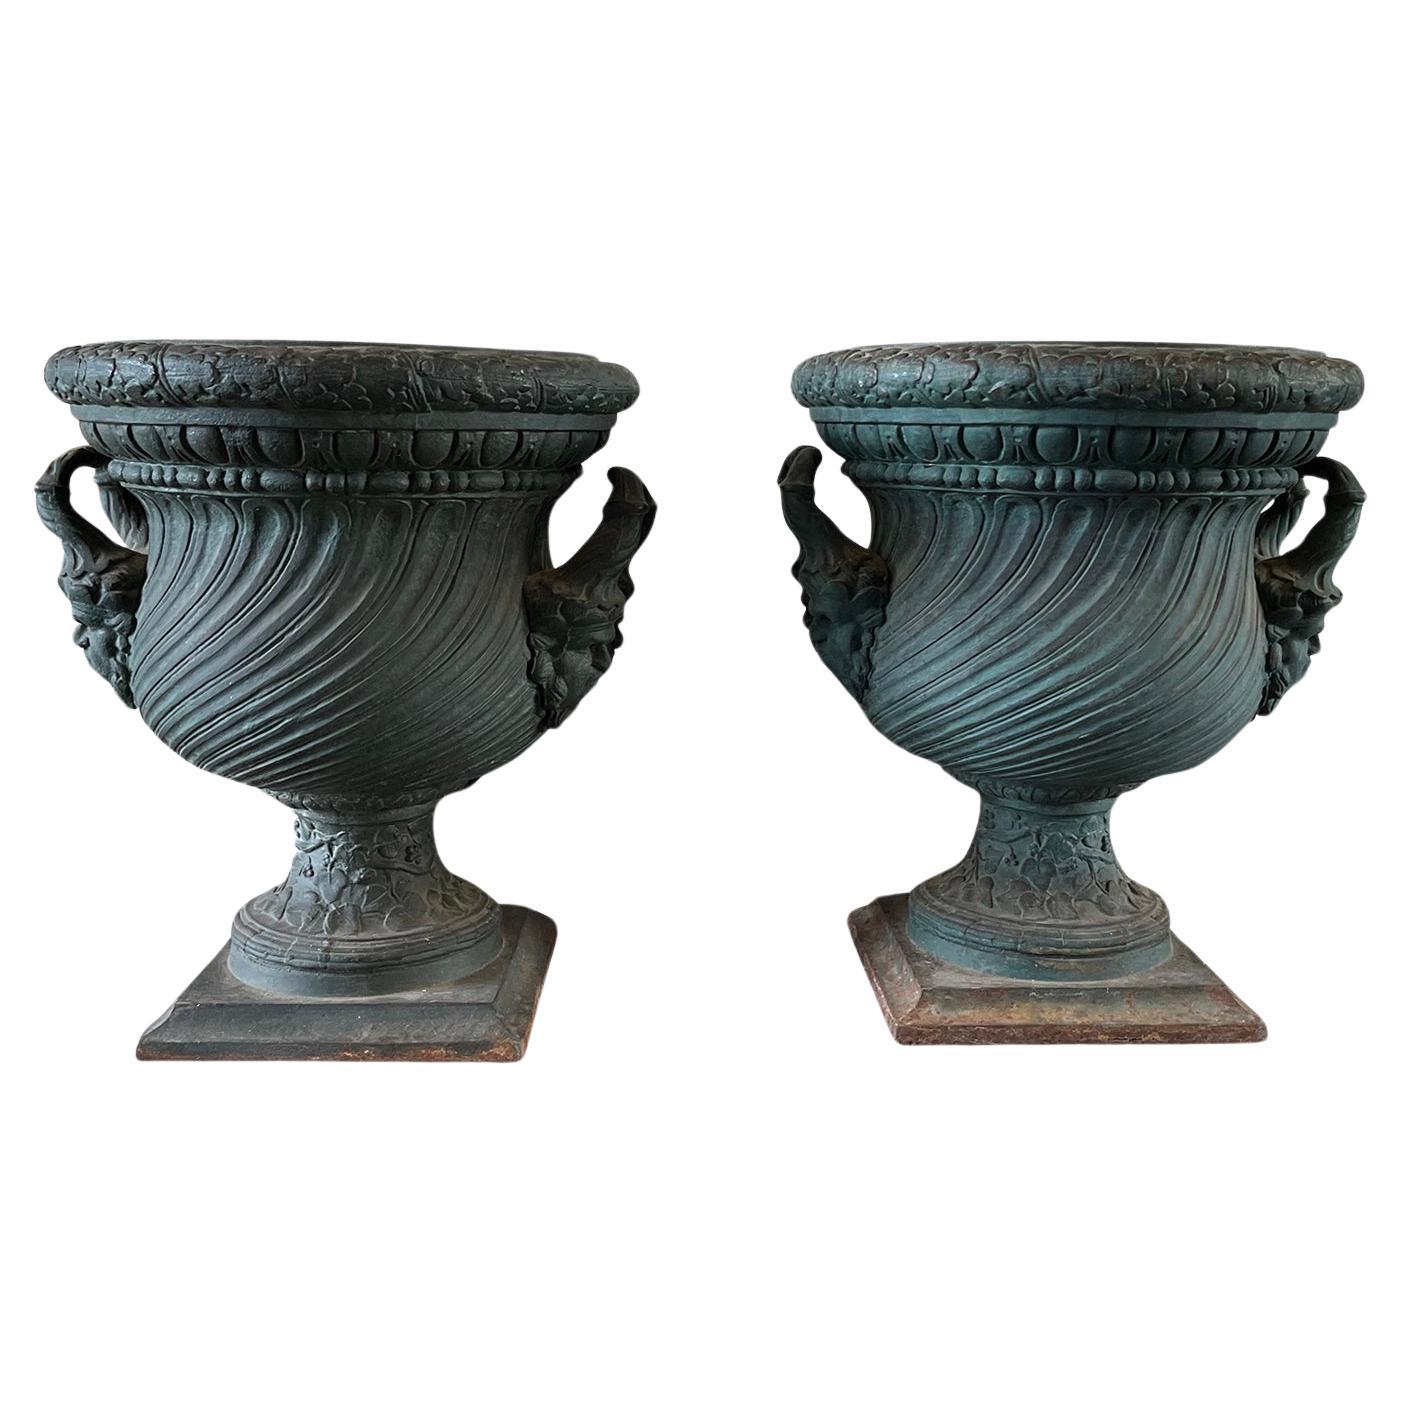 19th Century Pair of Ile de France Urns - Antique French Cast Iron Planters